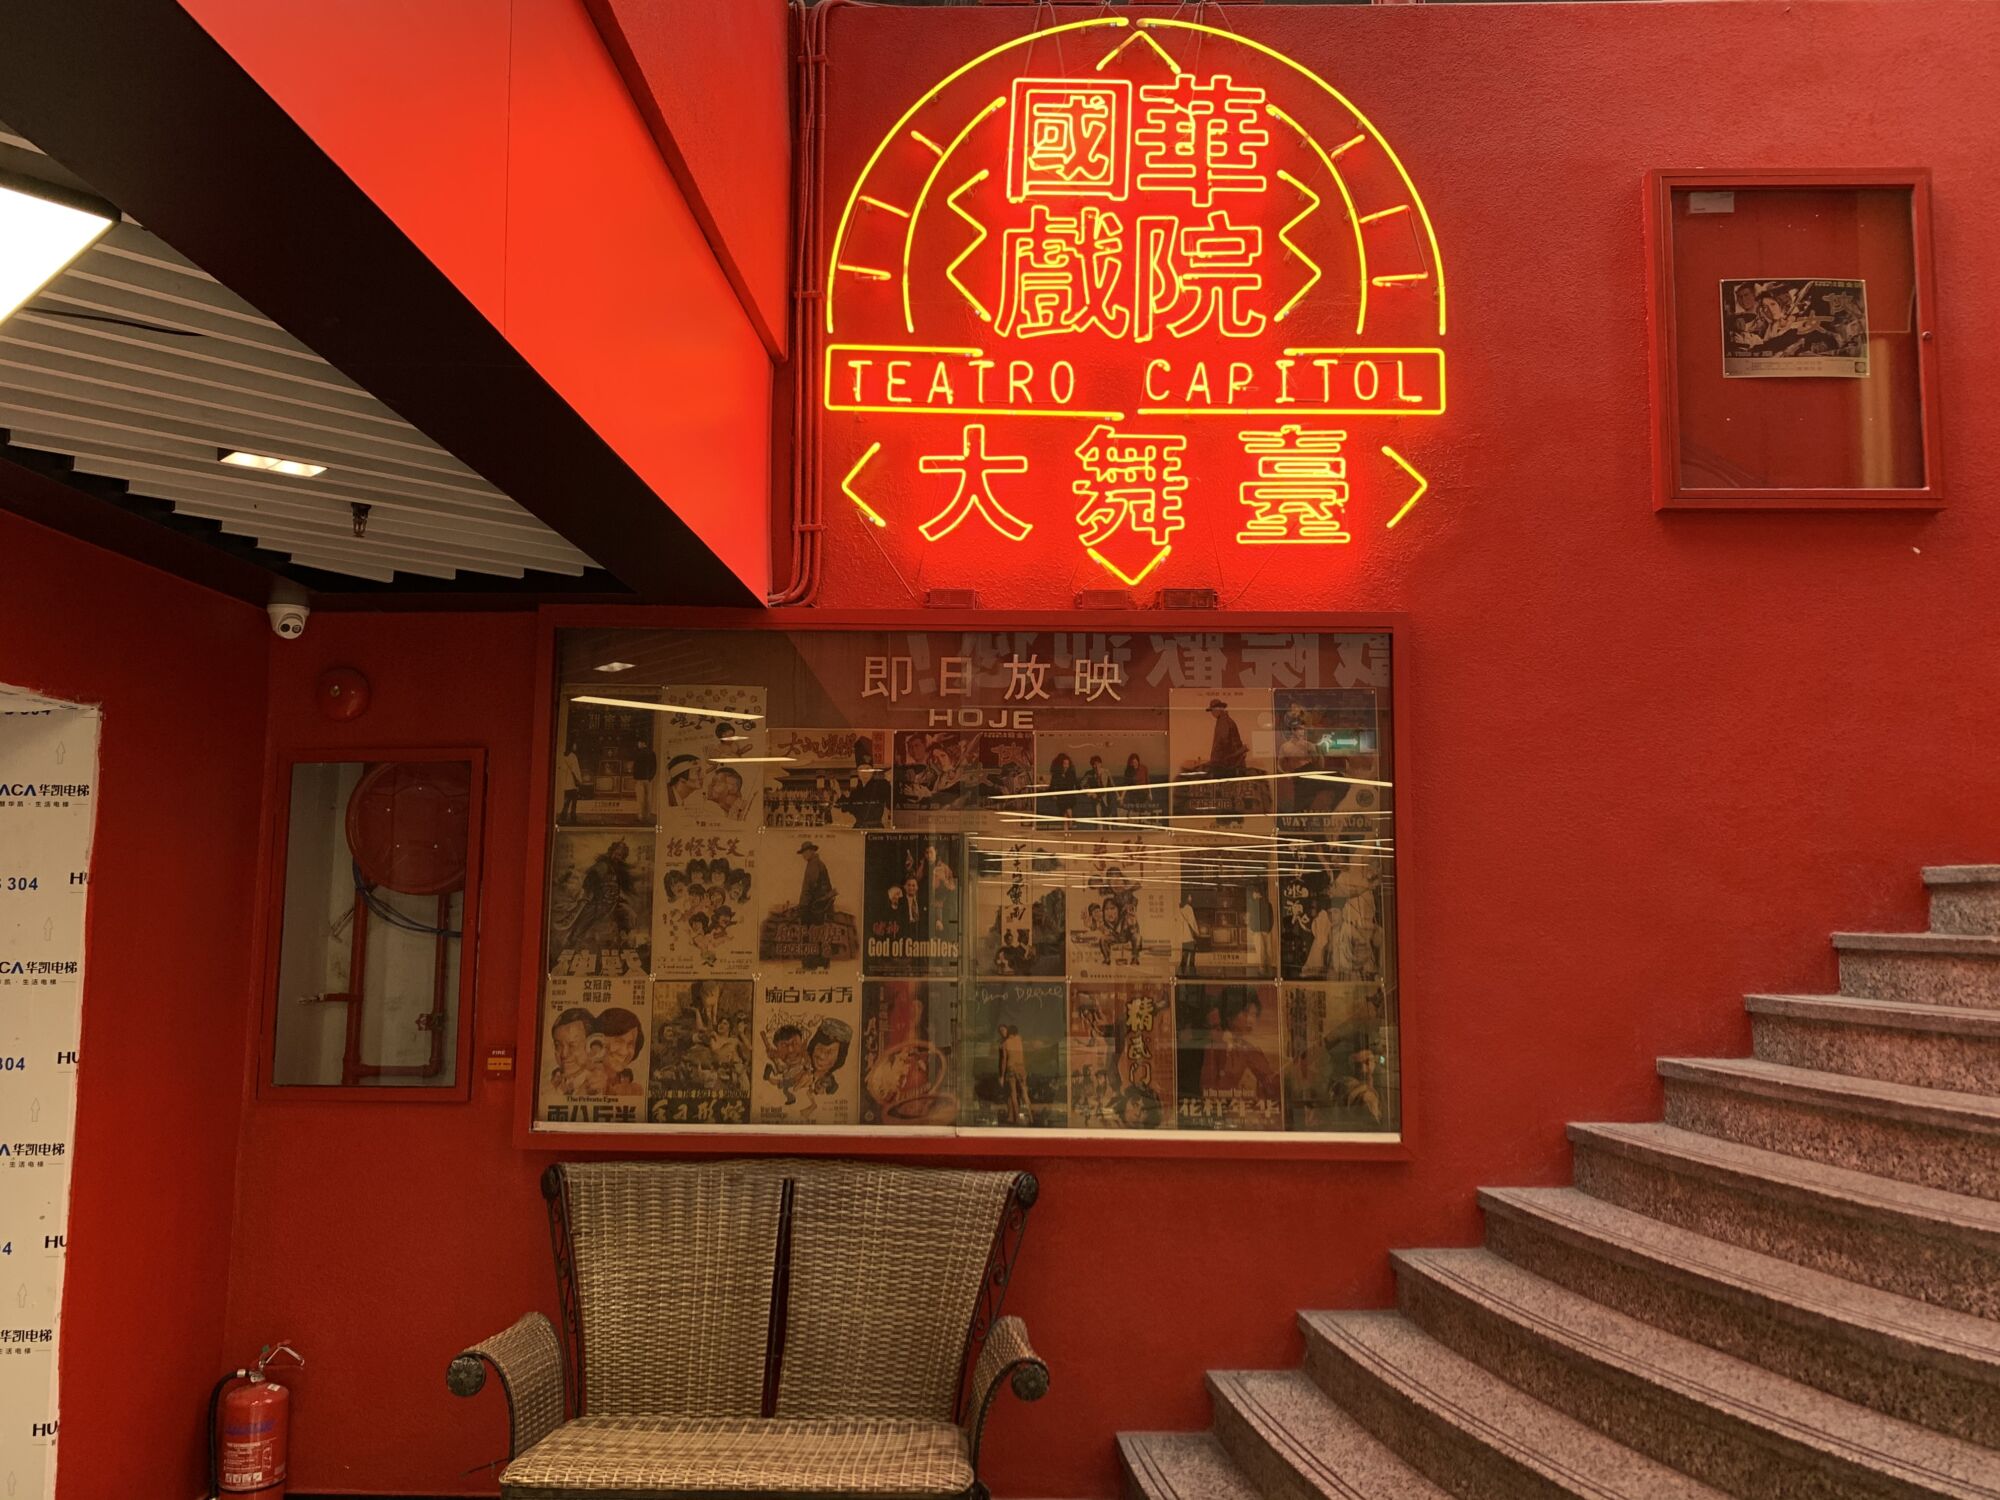 Teatro Capitol Cinema Hall Interior Neon Sign Macau Lifestyle